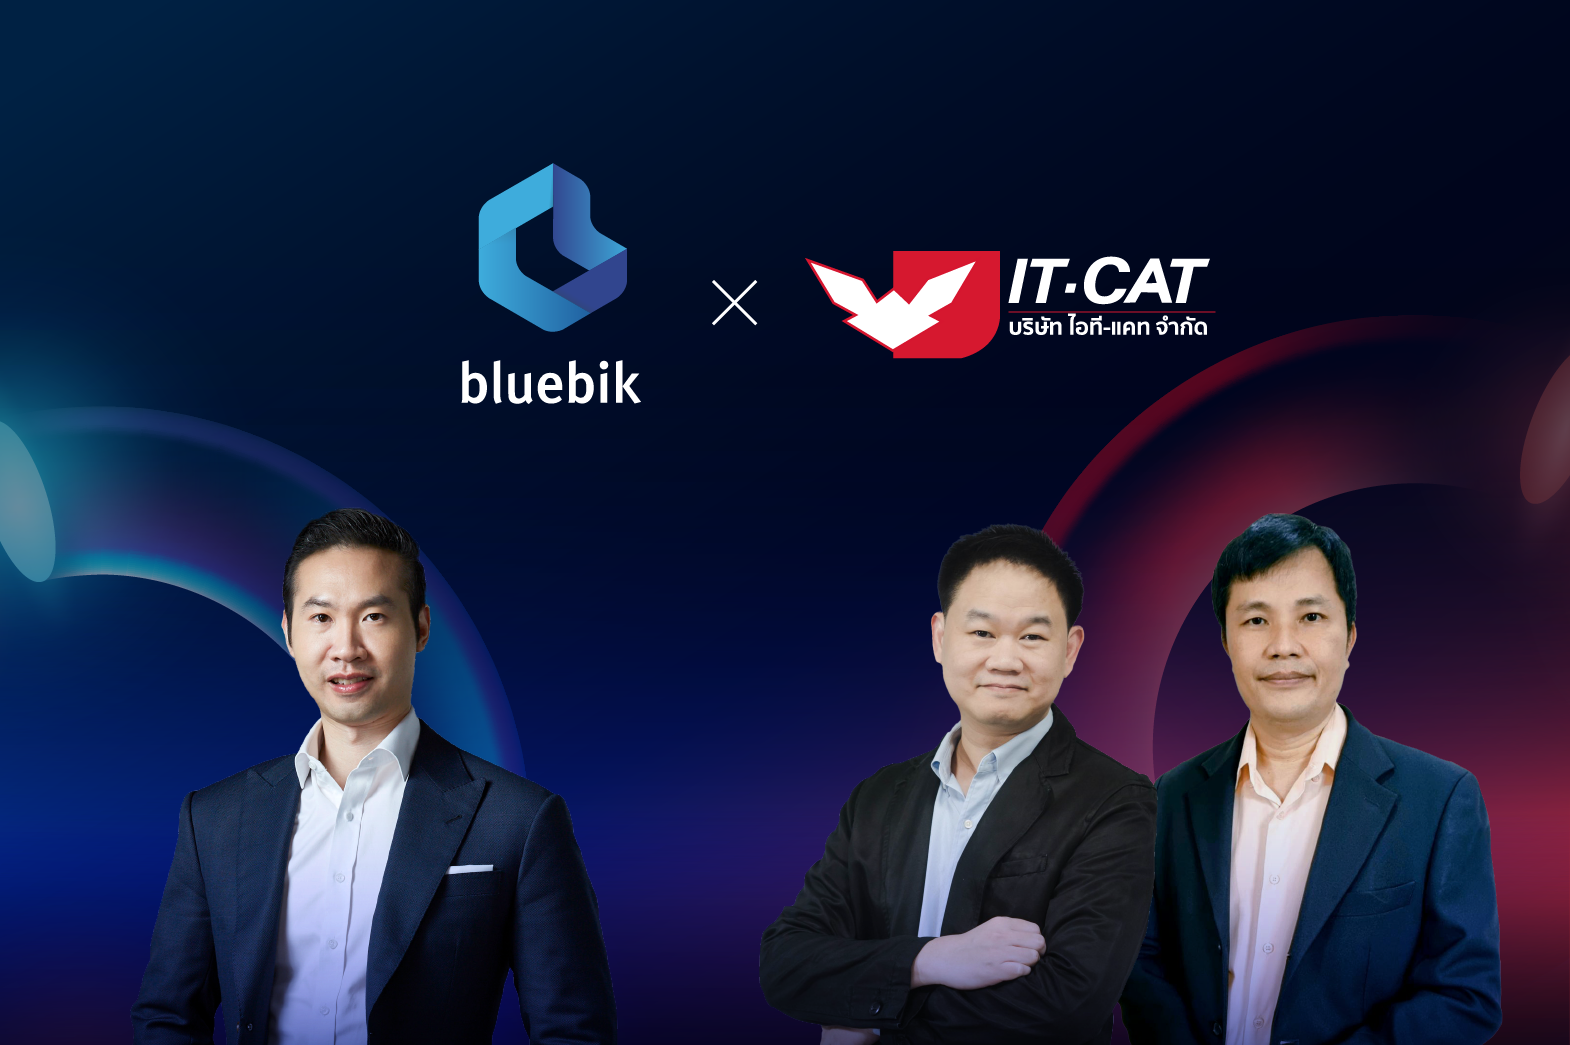 Bluebik ปิดดีลเพิ่ม เข้าซื้อหุ้น "IT-CAT" ผู้เชี่ยวชาญด้านพัฒนาและออกแบบซอฟต์แวร์บริหารจัดการทรัพยากรบุคคล